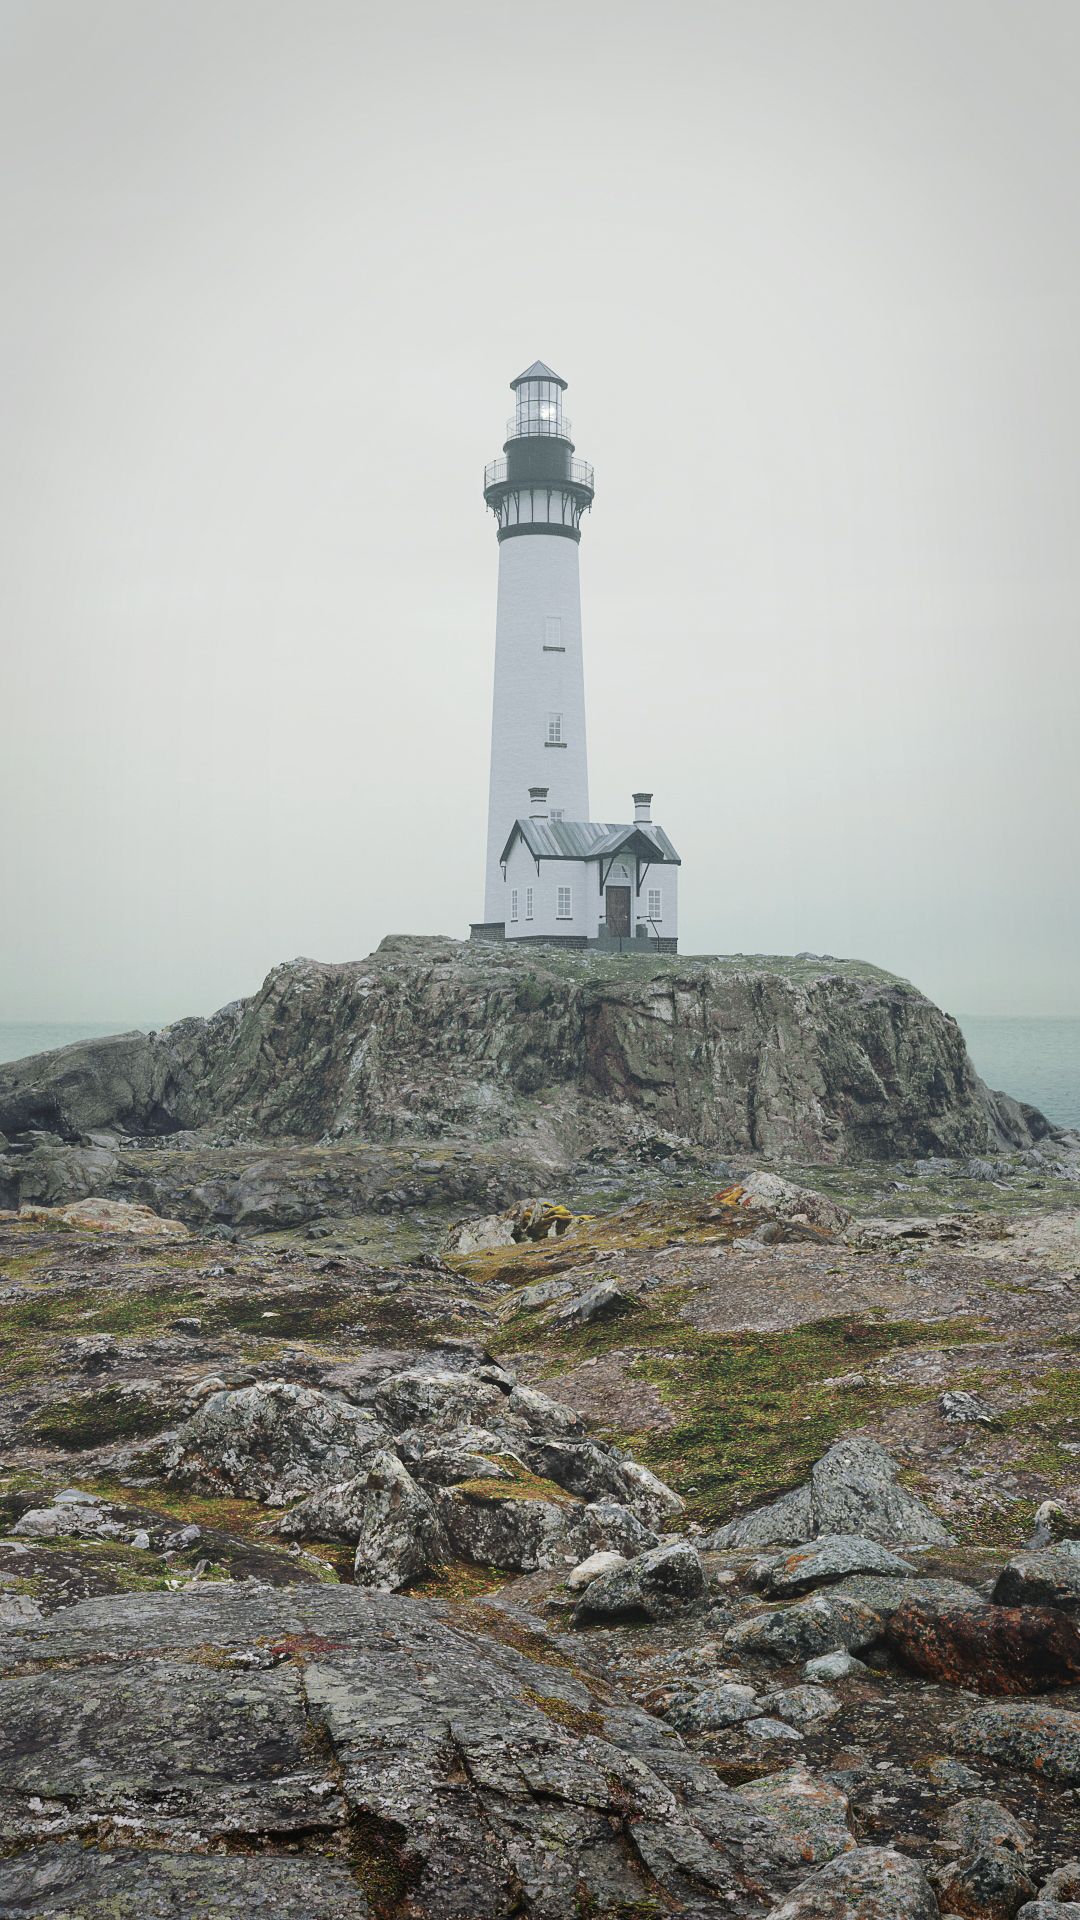 Portfolio image about lighthouse on the rock